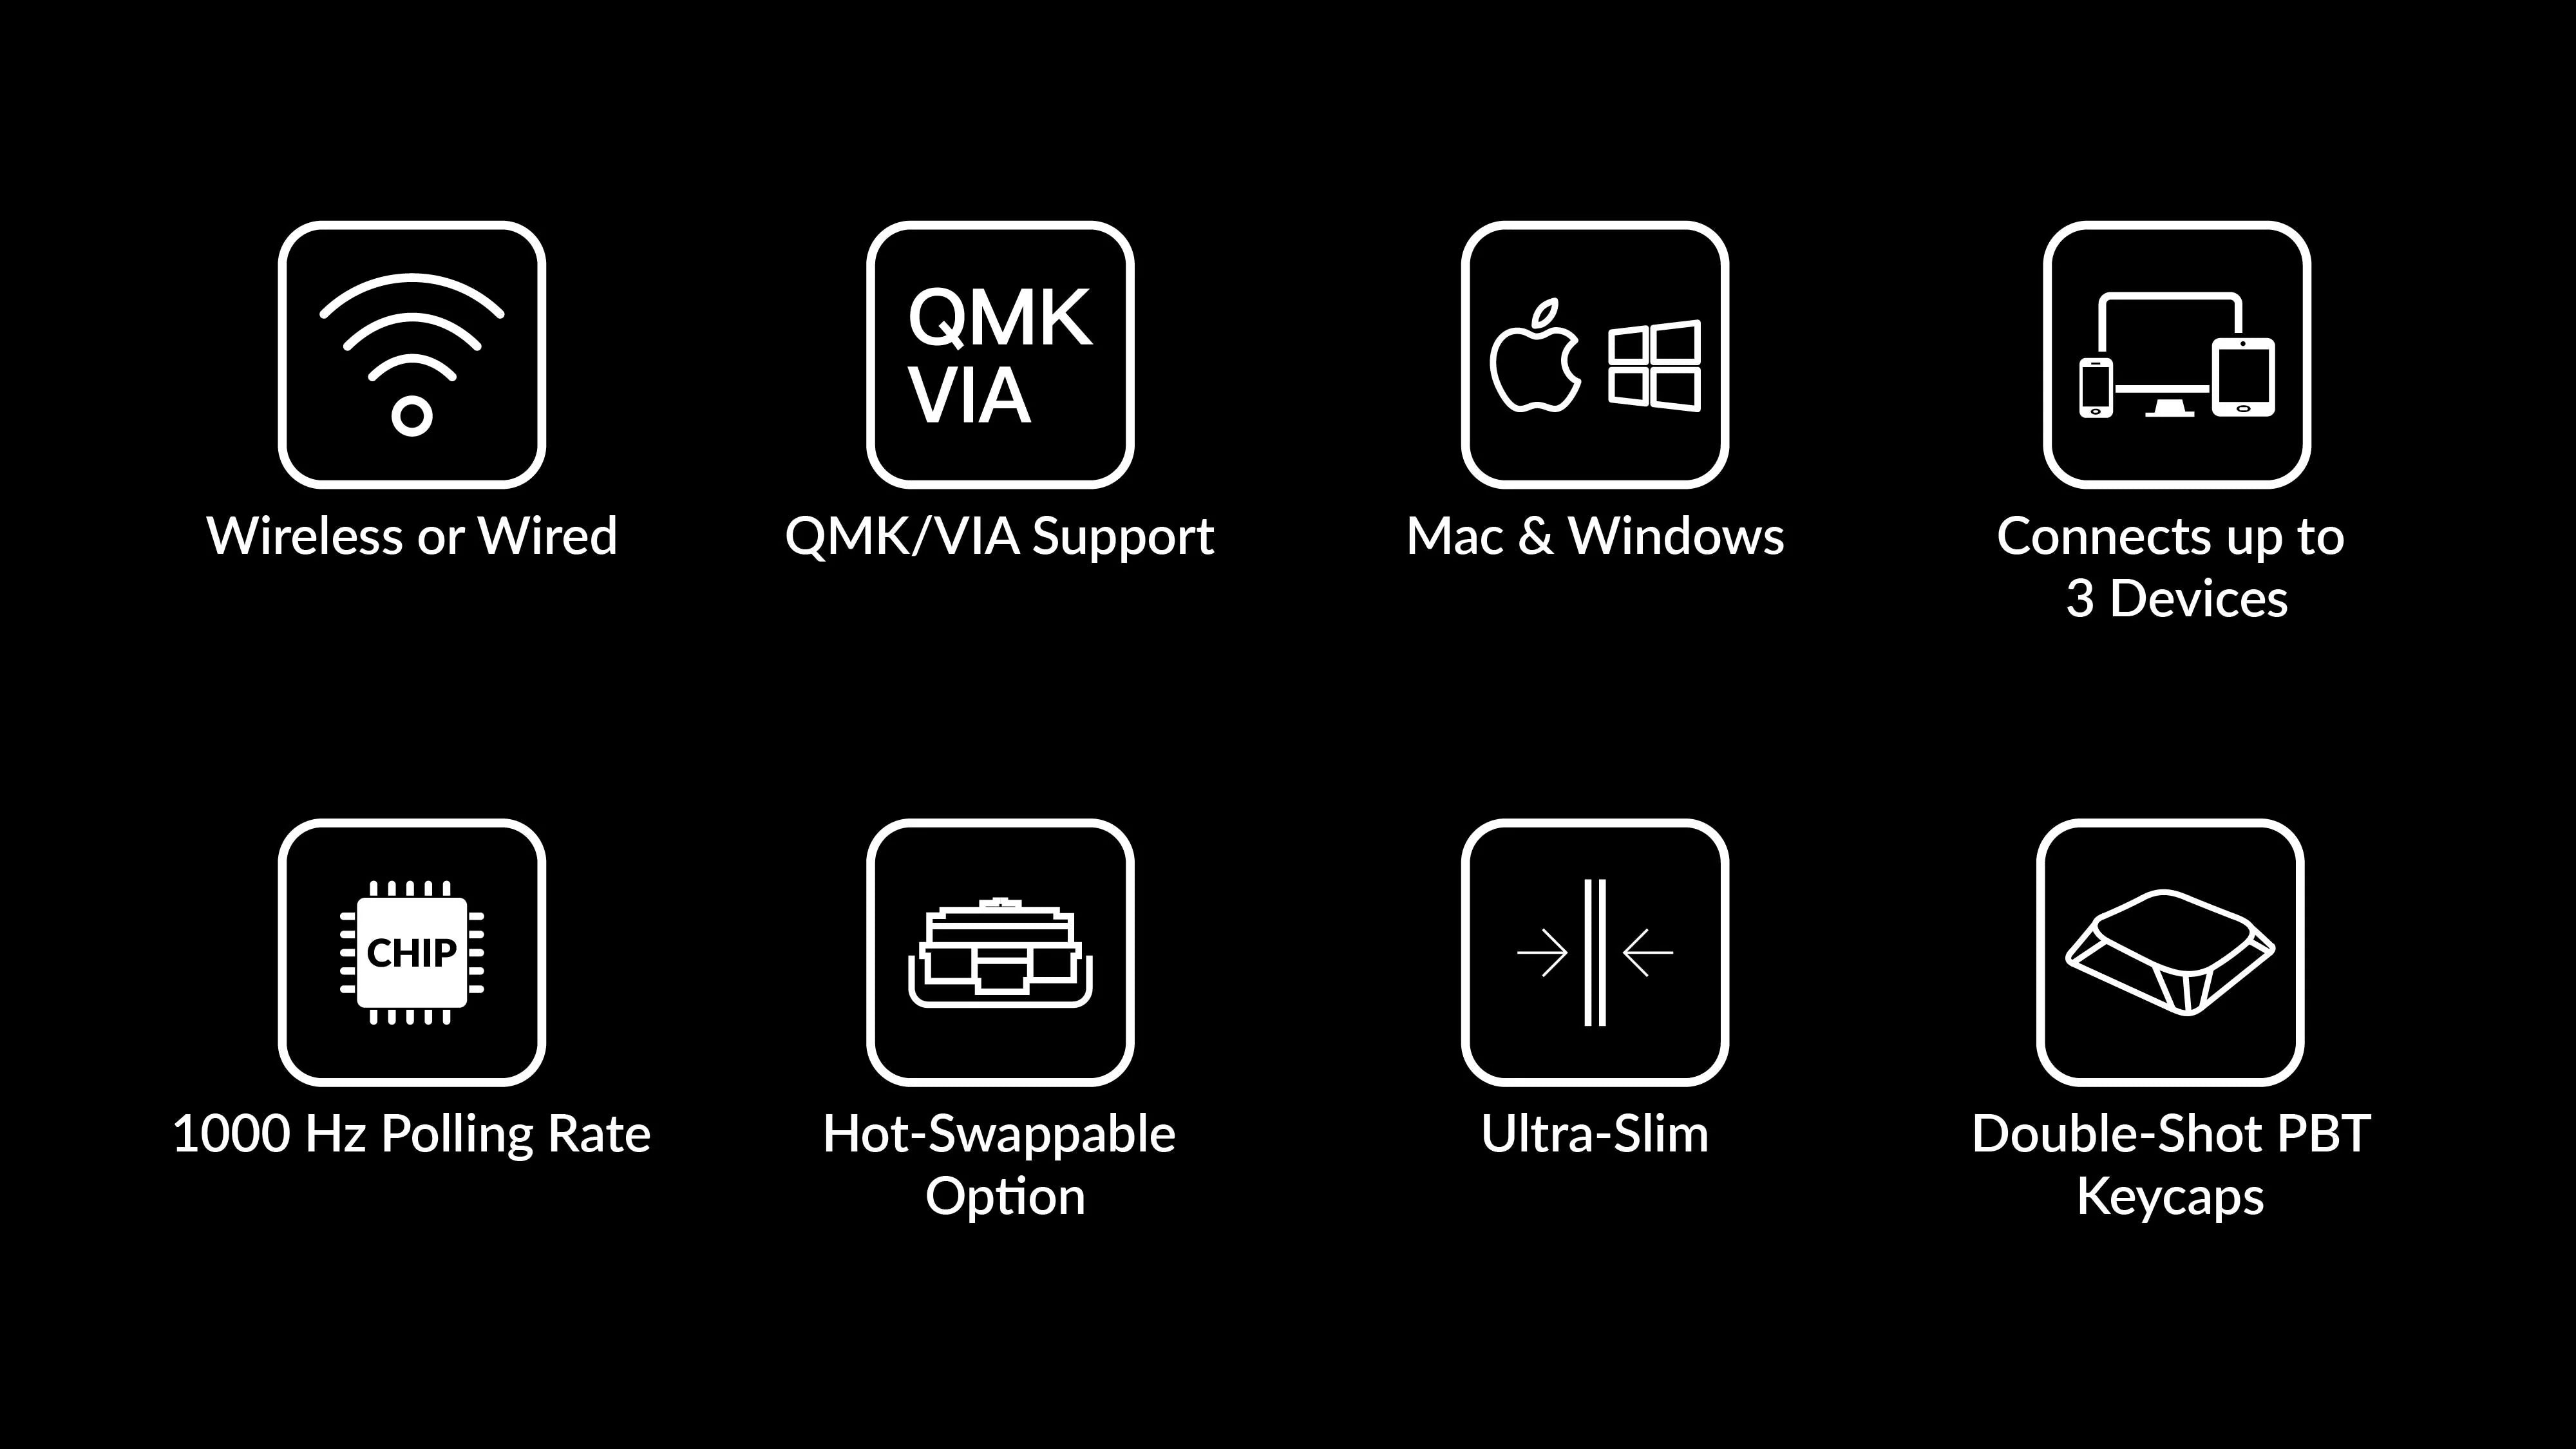 Features of Keychron K8 Pro QMK/VIA Wireless Mechanical Keyboard